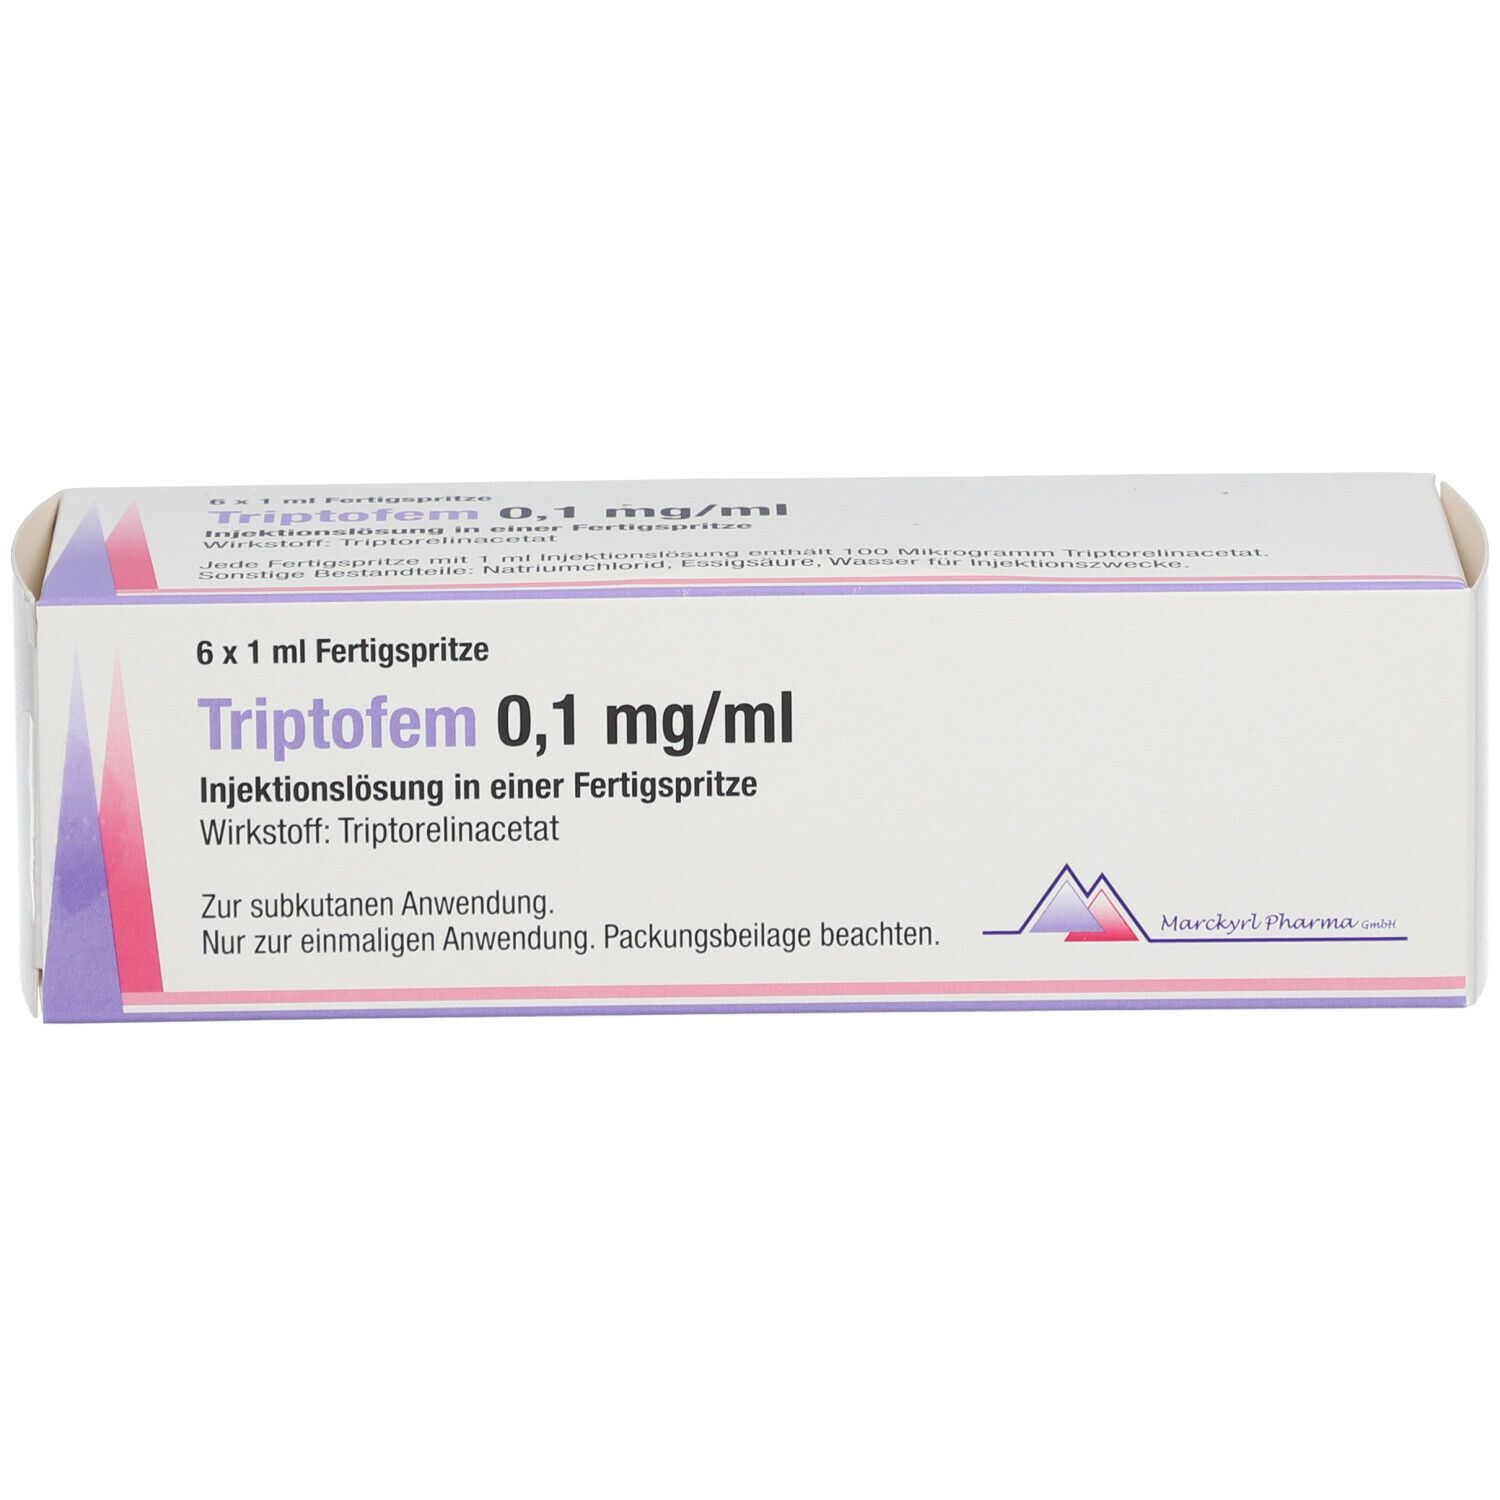 Triptofem 0,1 mg/ml